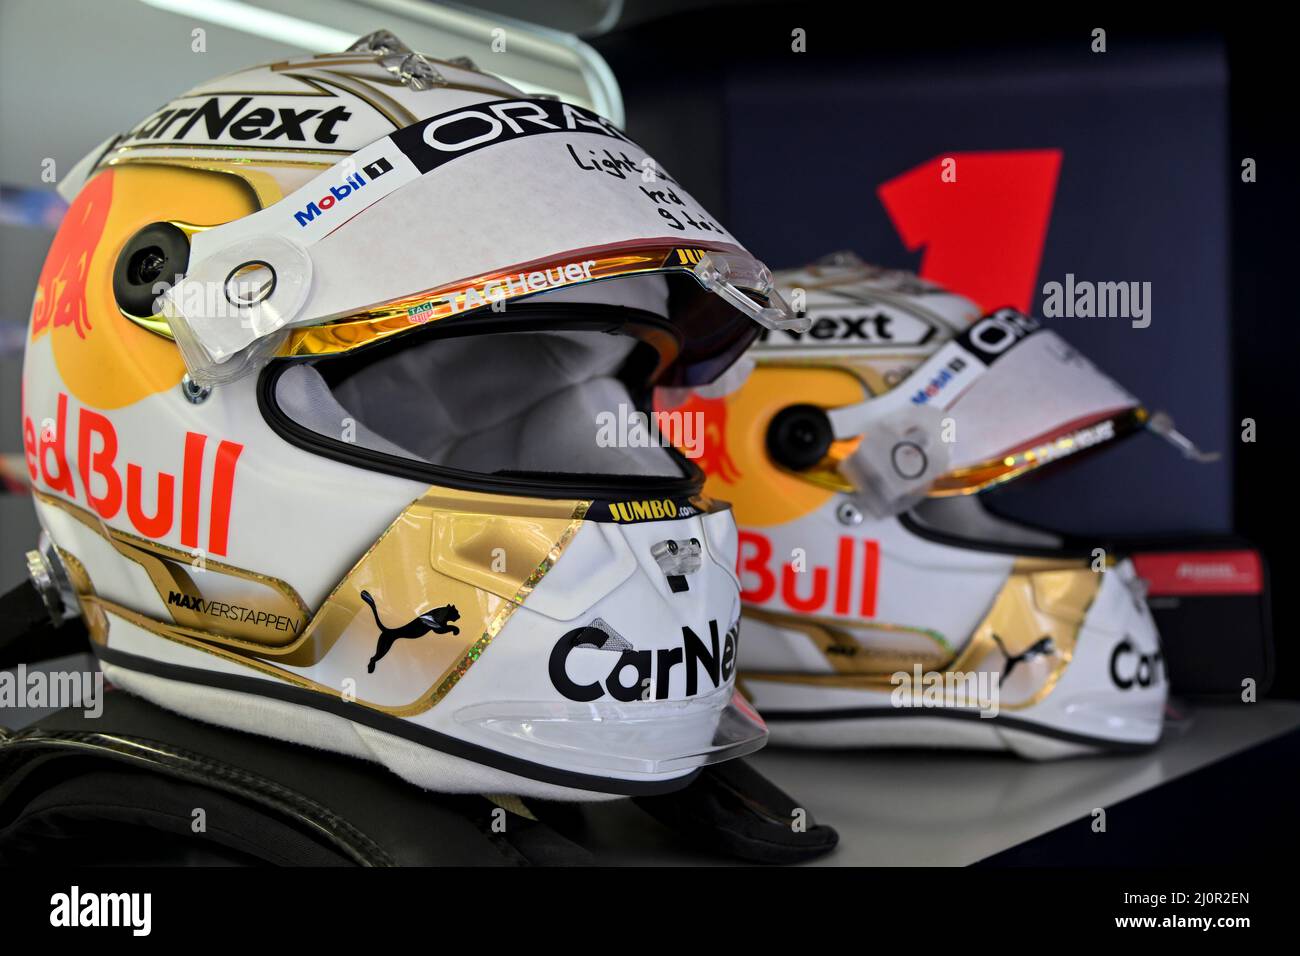 Sakhir, Bahreïn. 19th mars 2022. Casque de #1 Max Verstappen (NLD, Oracle  Red Bull Racing), Grand Prix de Bahreïn F1 au circuit international de  Bahreïn le 19 mars 2022 à Sakhir, Bahreïn. (